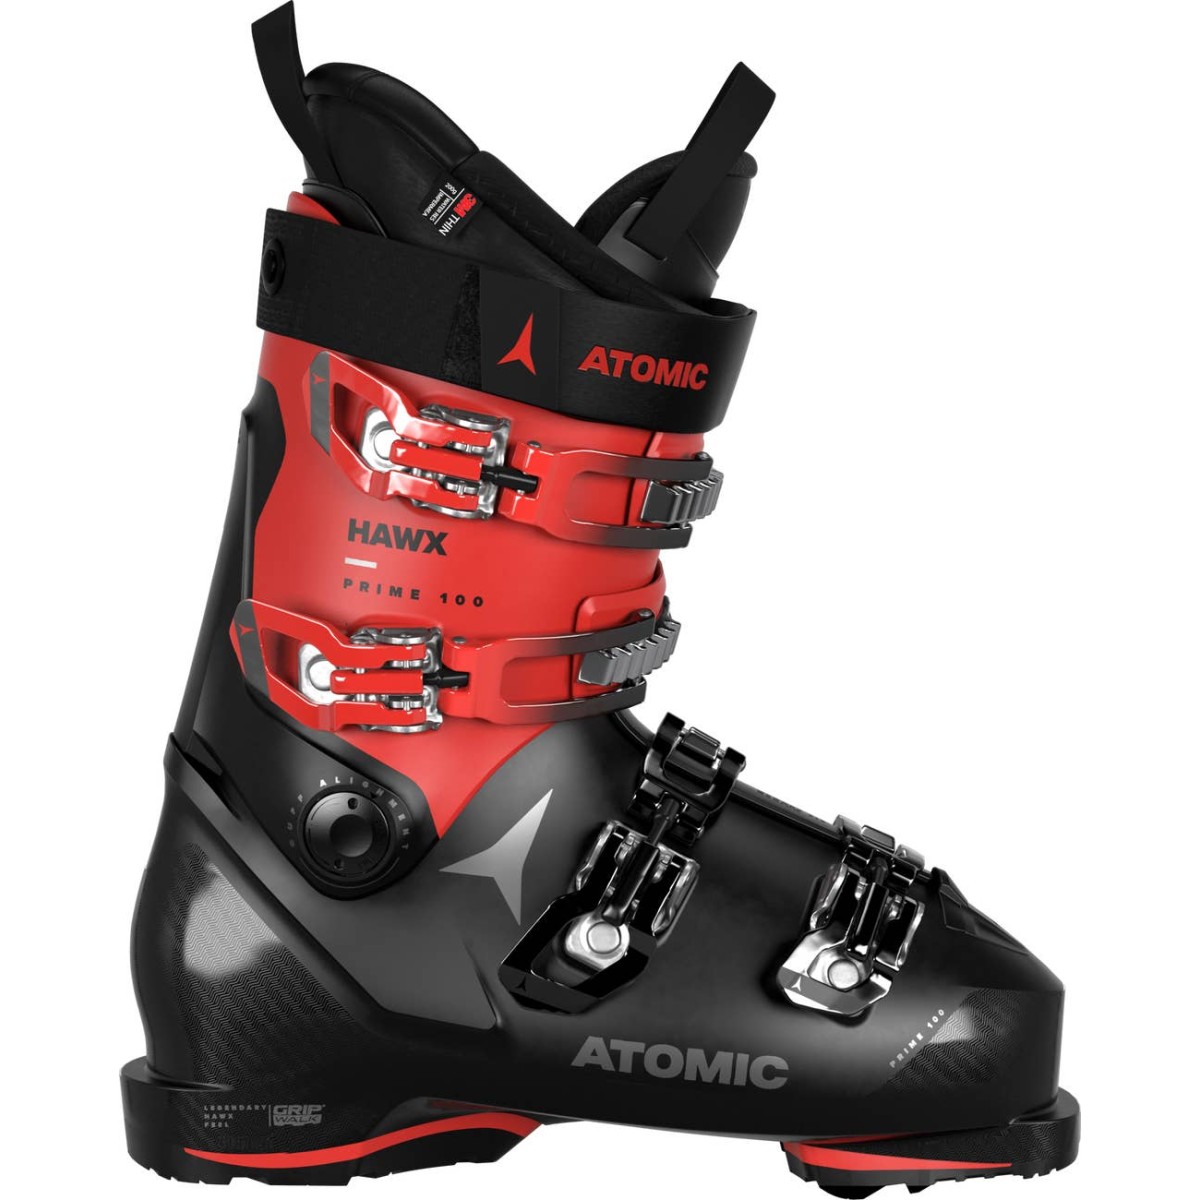 ATOMIC HAWX PRIME 100 GW alpine ski boots - black/red